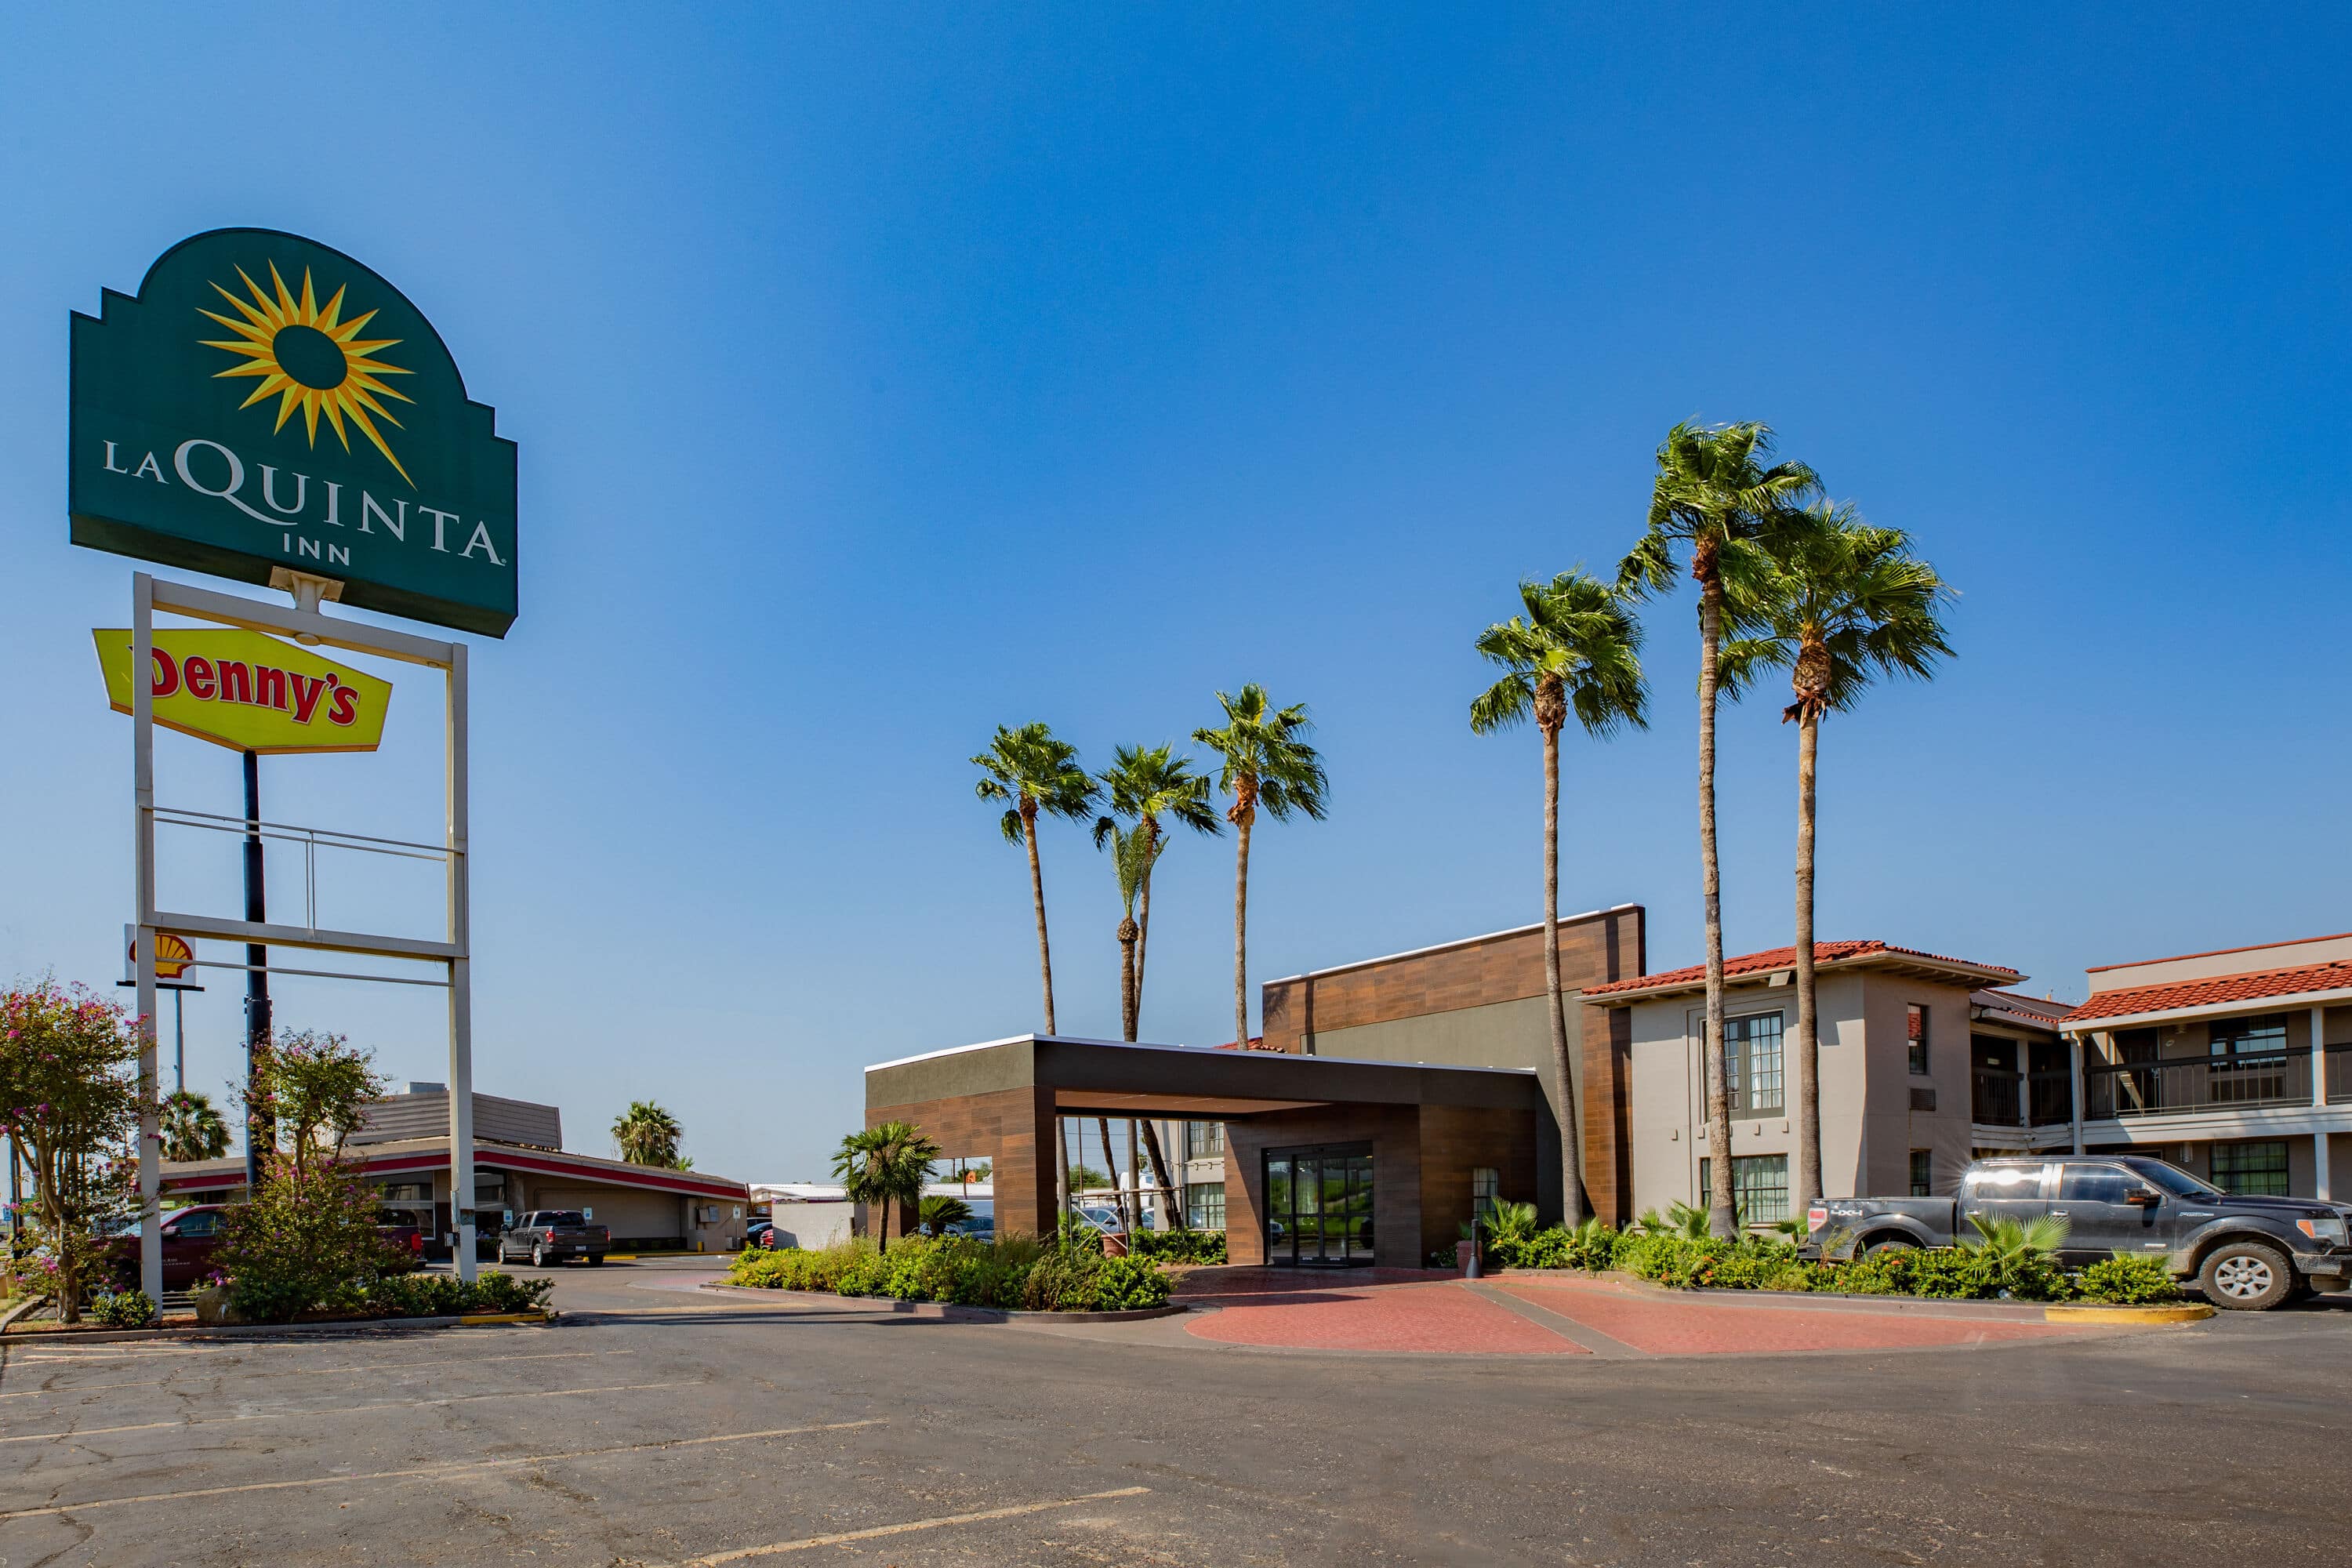 Hotels in Laredo, TX – Choice Hotels